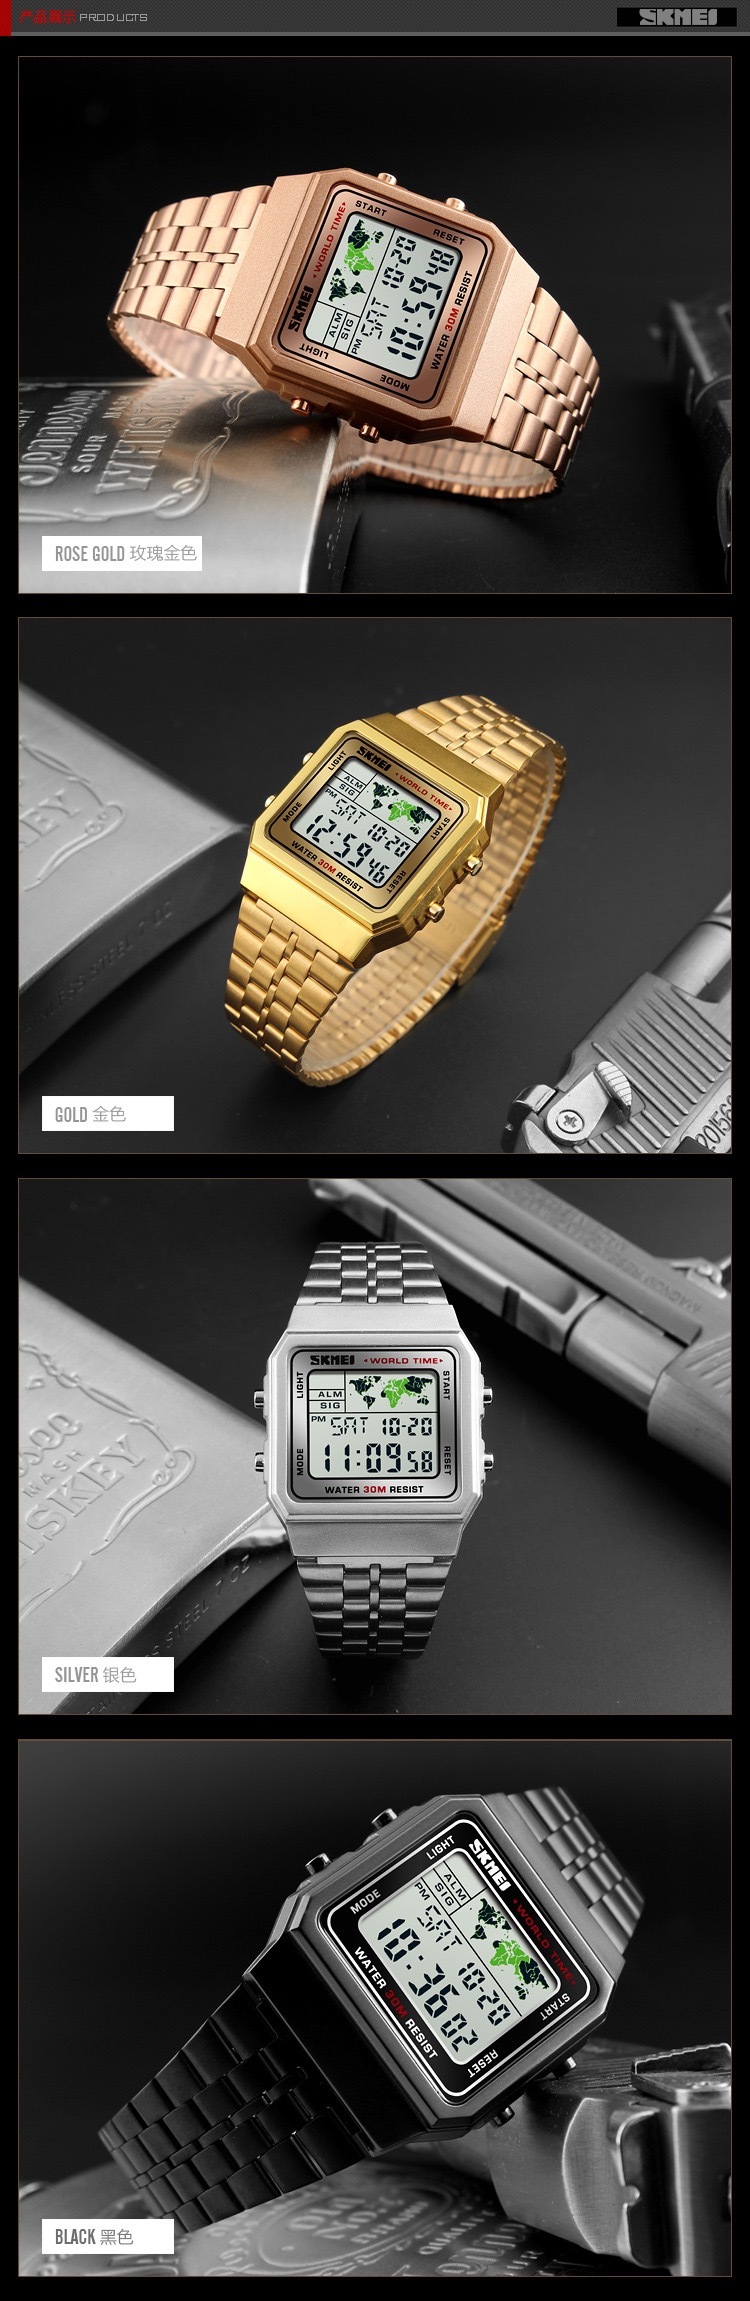 SKMEI新款商务时尚方形电子表 秒表倒计时世界时间多功能钢带手表详情4